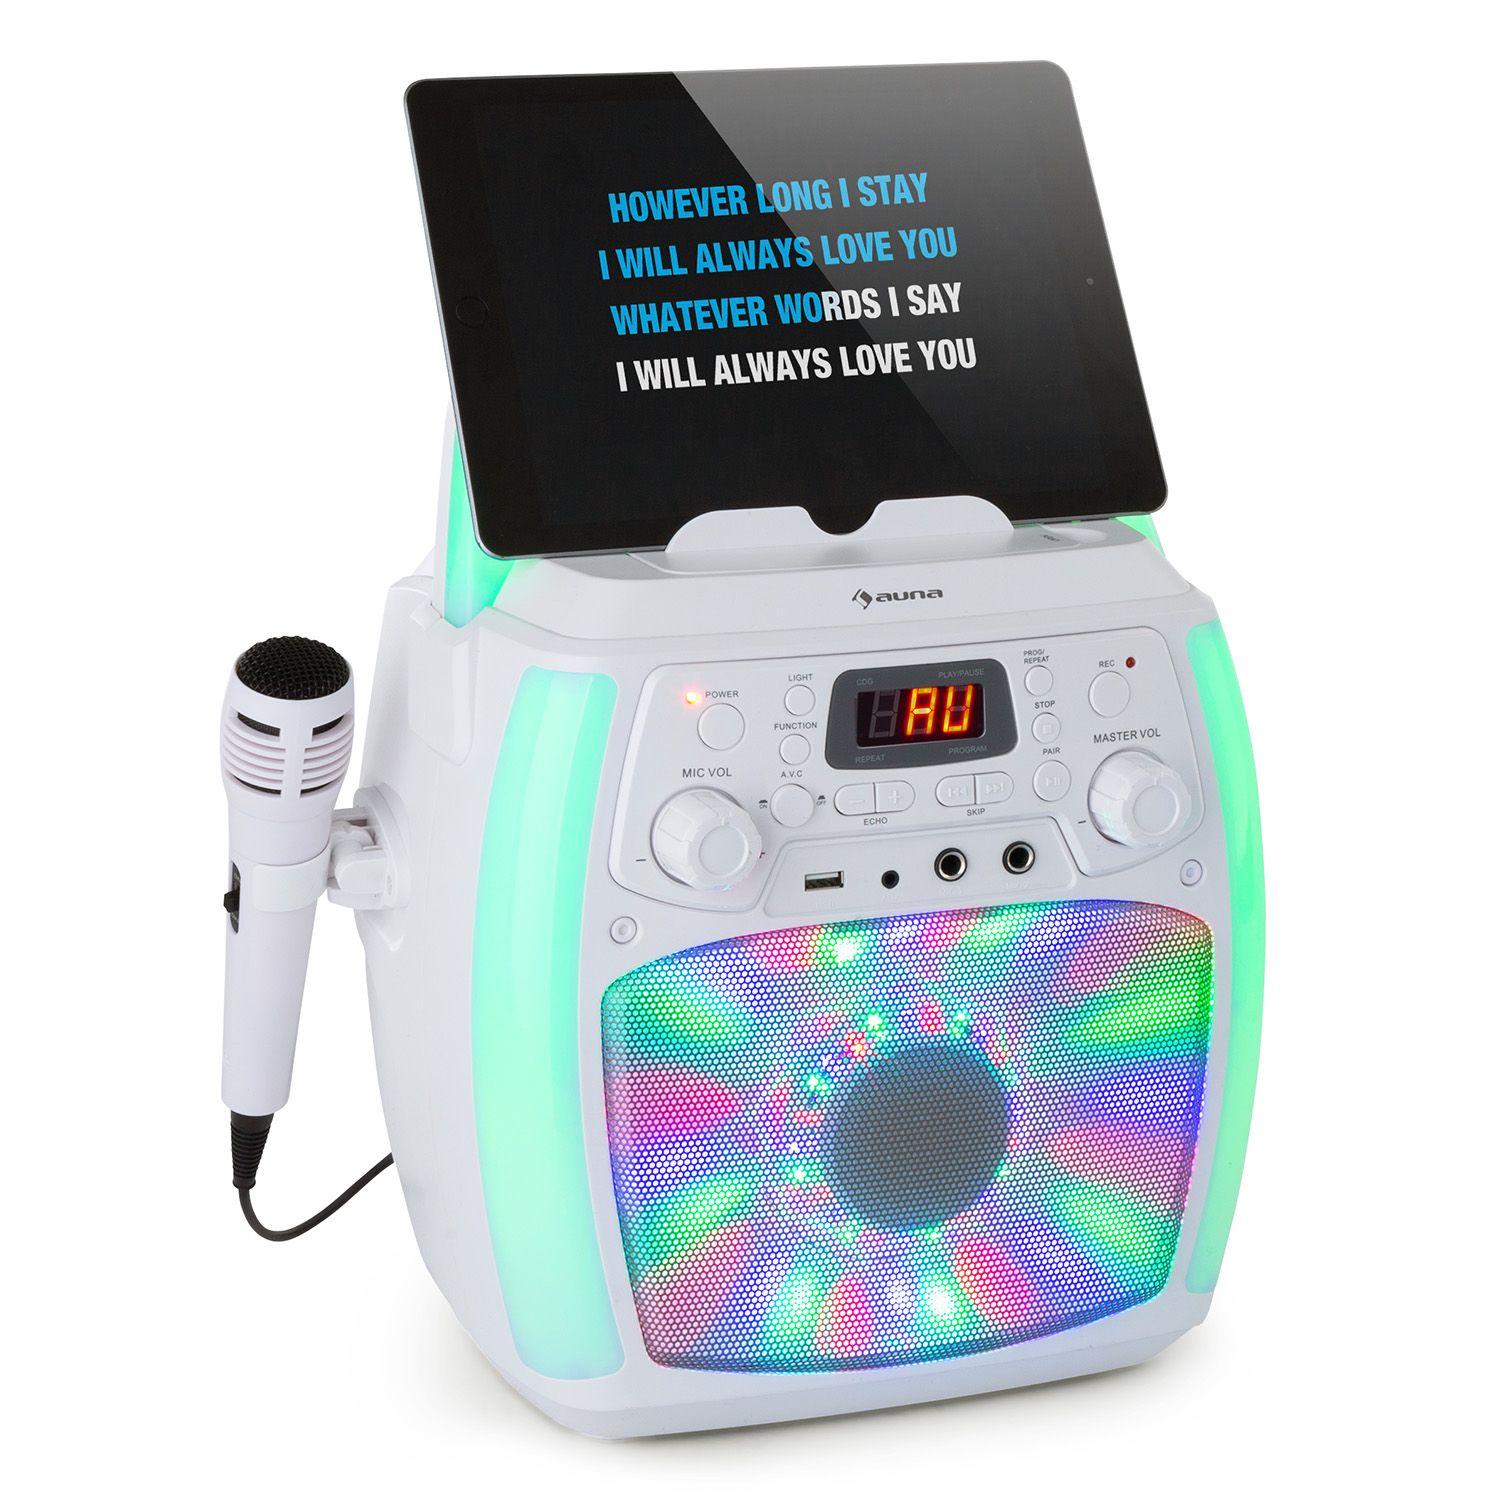 Enceinte portable - auna blaster radio dab - bluetooth dab/dab+/fm batterie  lcd - violet AUNA Pas Cher 